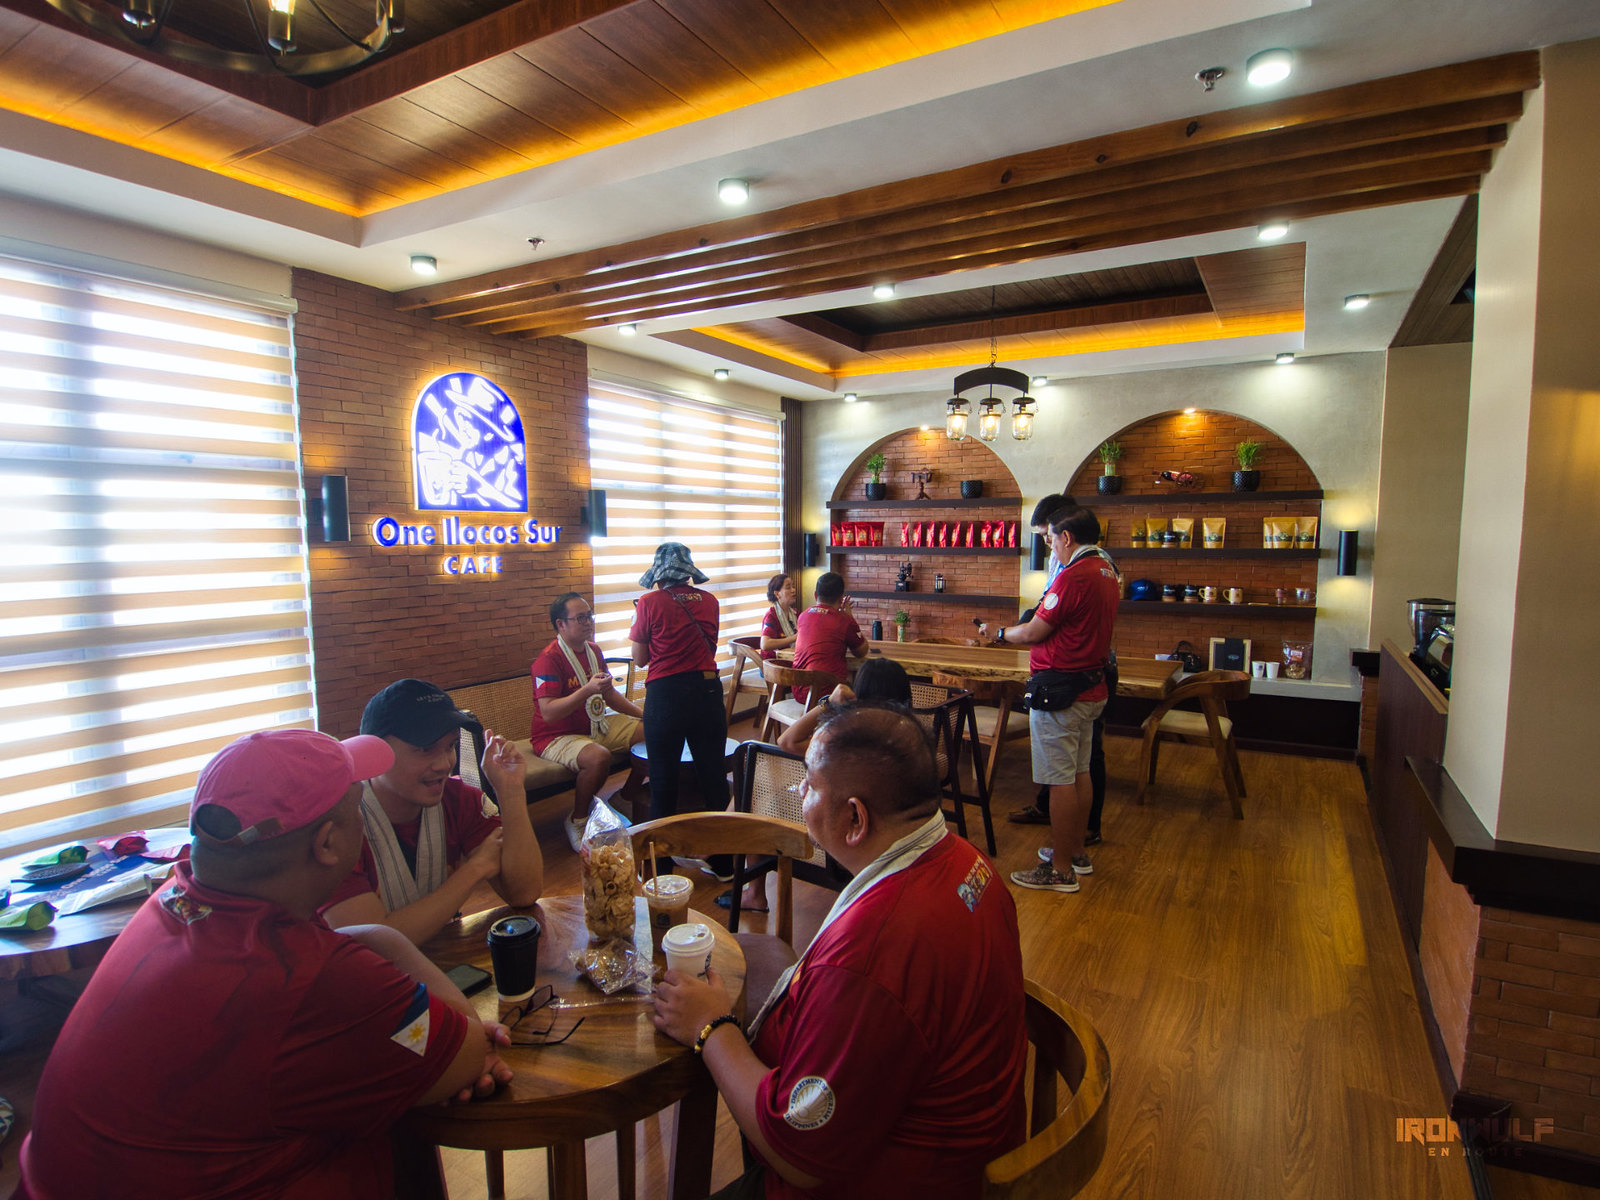 One Ilocos Sur Cafe